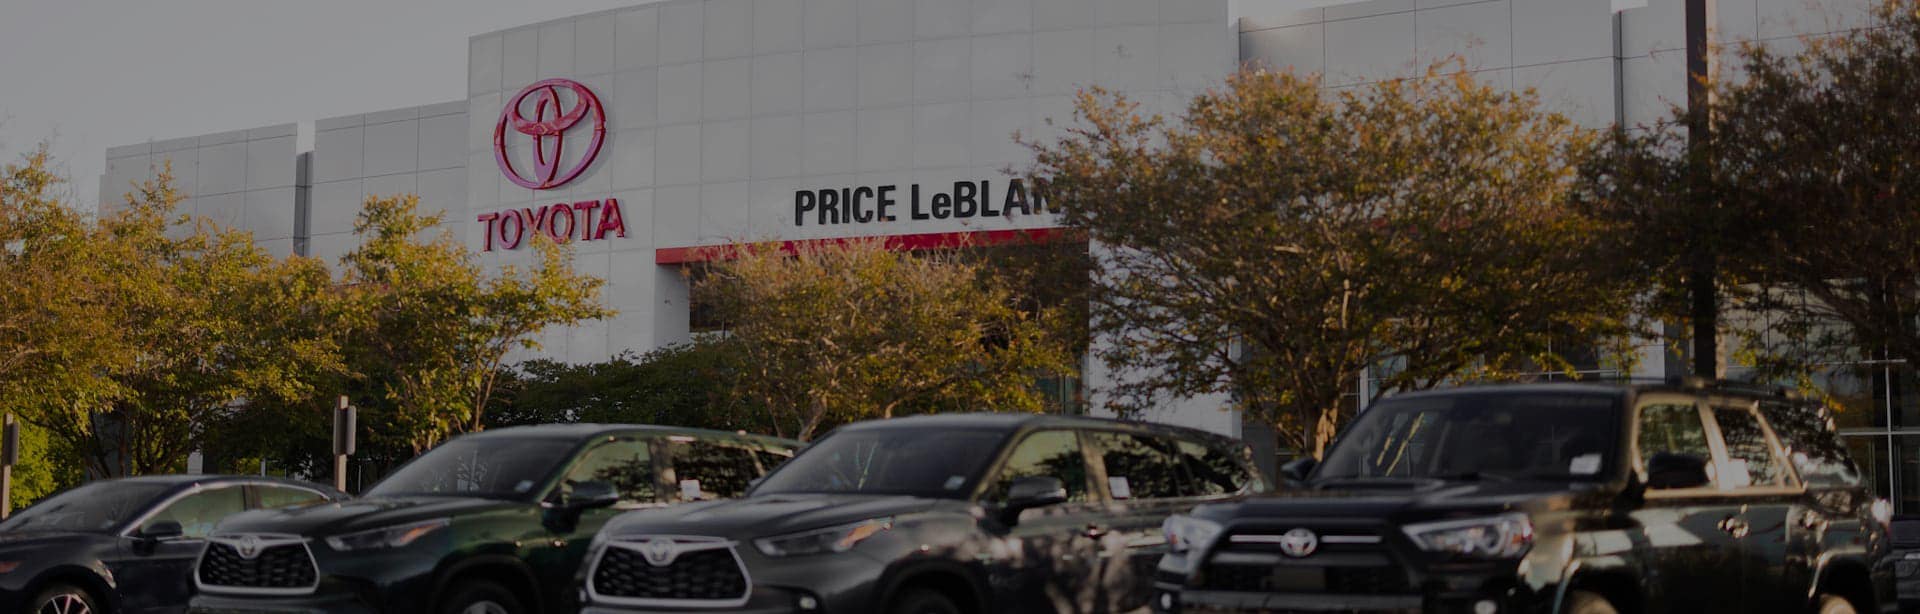 Price LeBlanc dealership